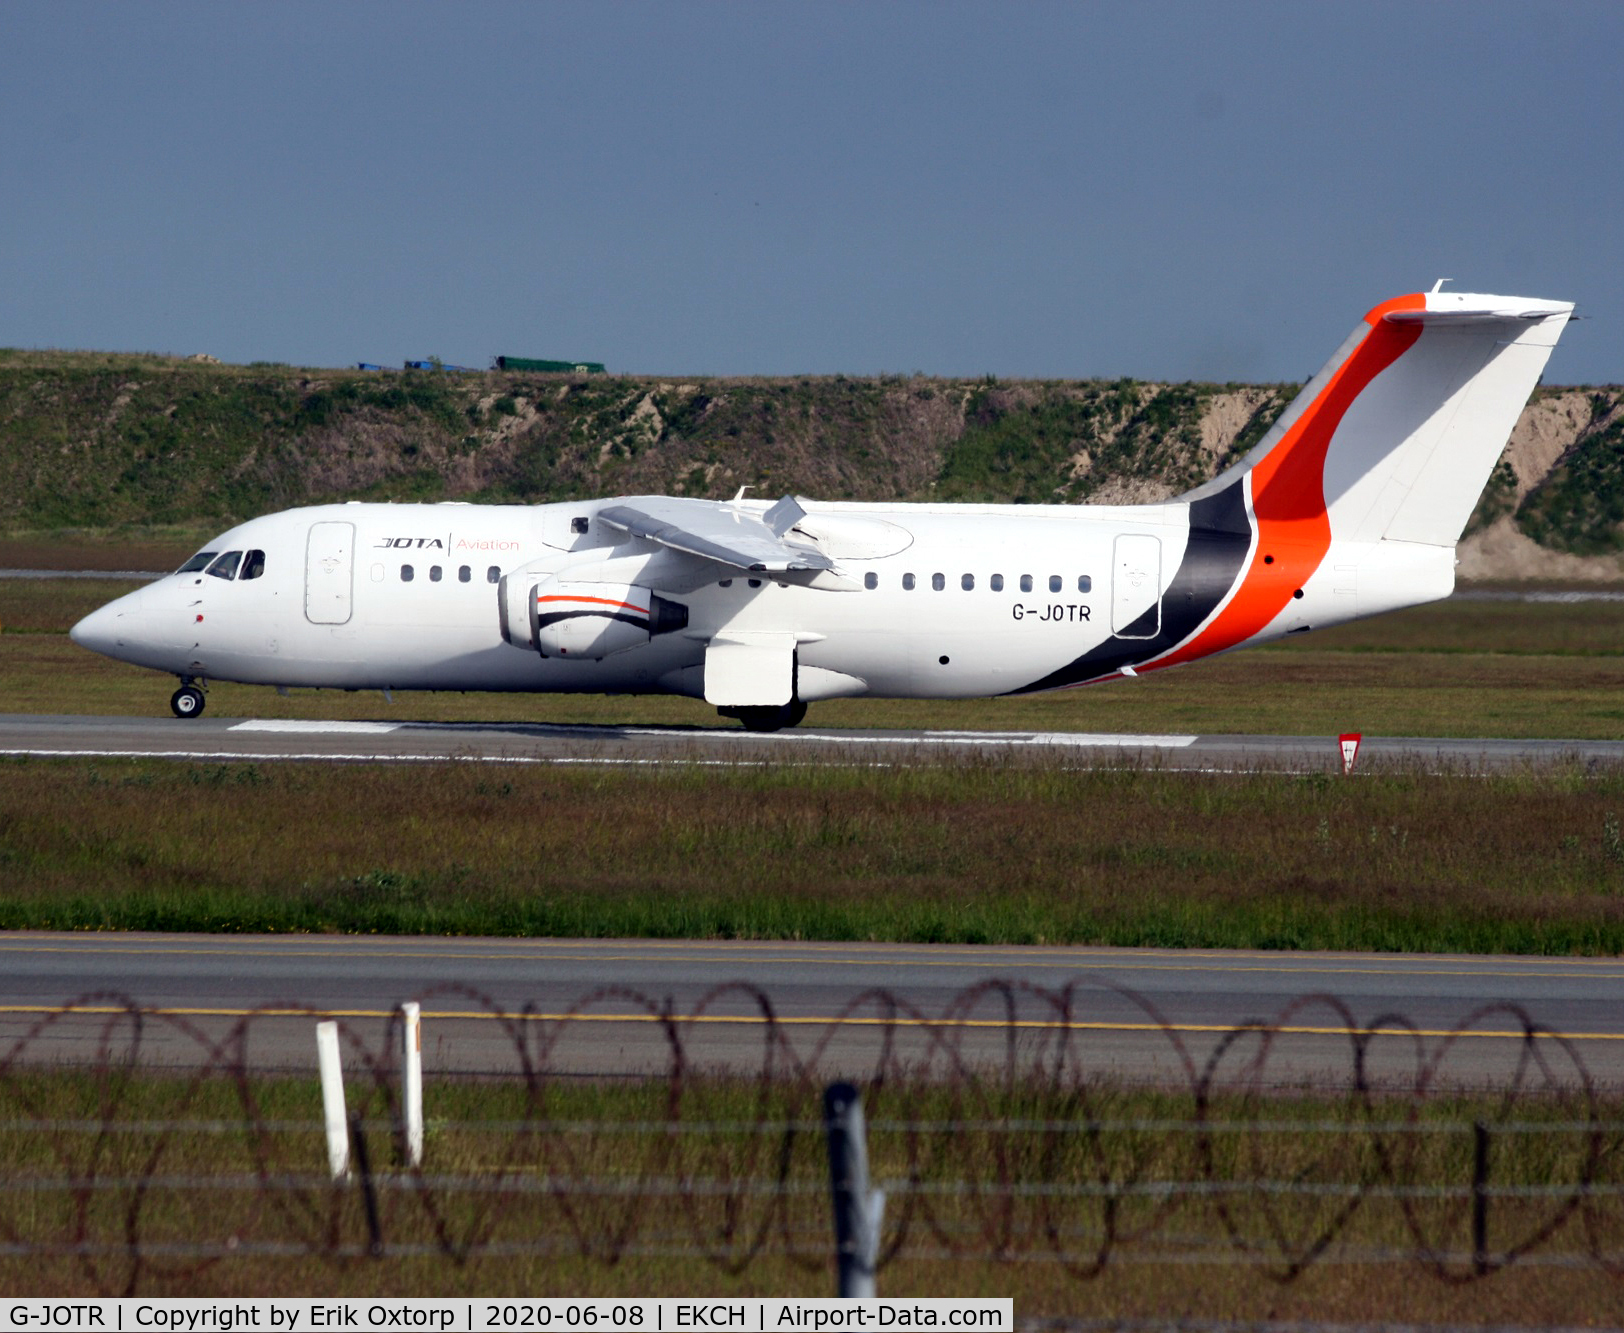 G-JOTR, 1996 British Aerospace Avro 146-RJ85 C/N E.2294, G-JOTR landed rw 04L